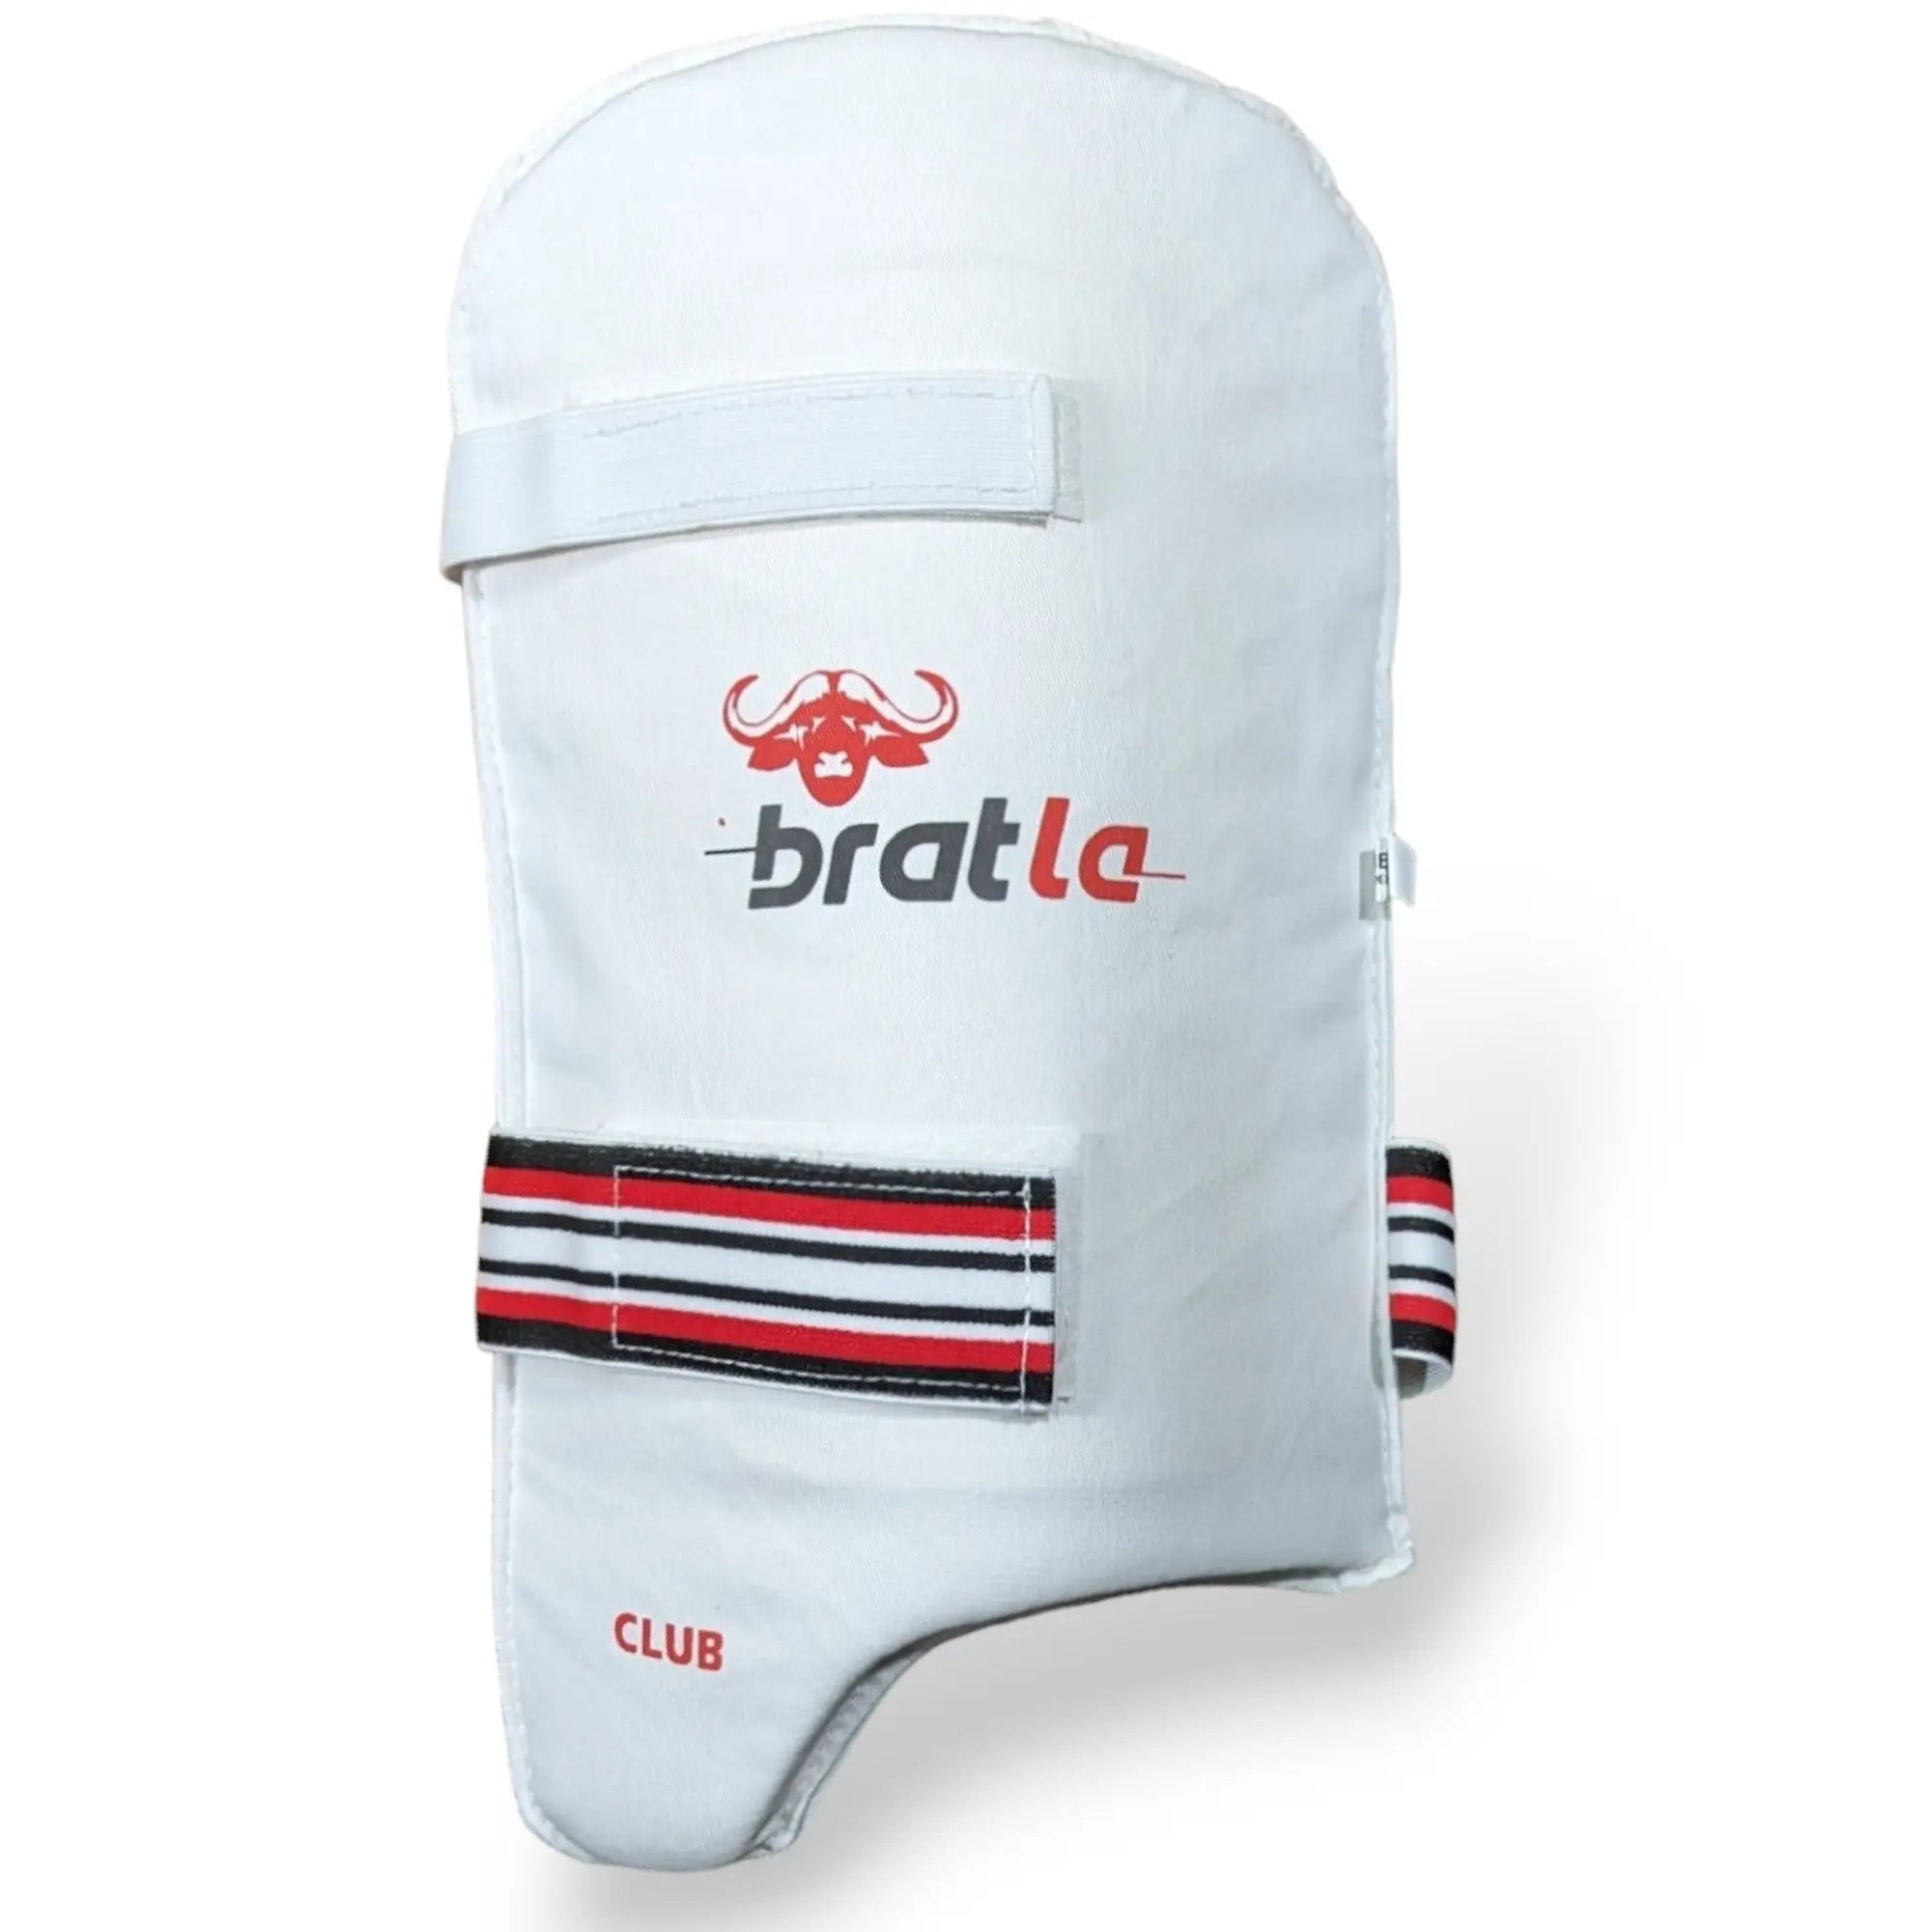 Bratla Cricket Club Thigh Guard Pad Protector Foam Padded Super Lightweight - Adult RH - BODY PROTECTORS - THIGH GUARD